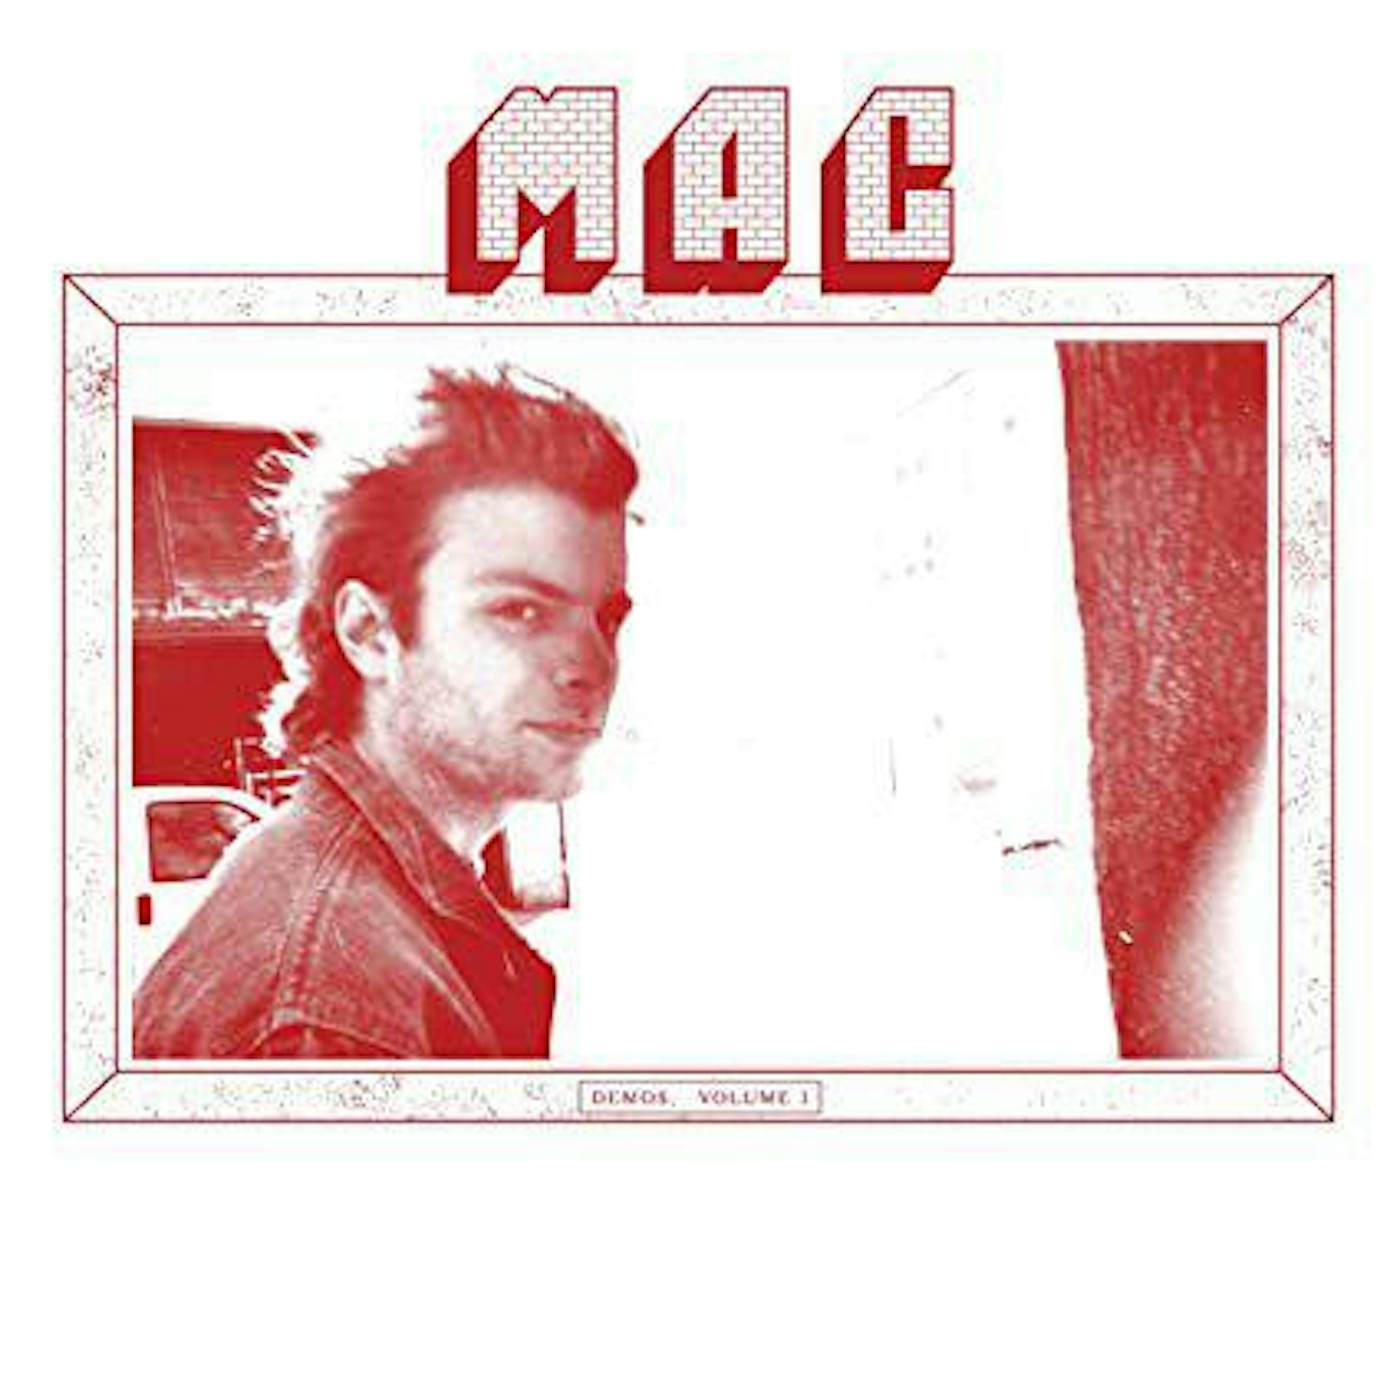 Mac DeMarco DEMOS VOLUME 1 CD